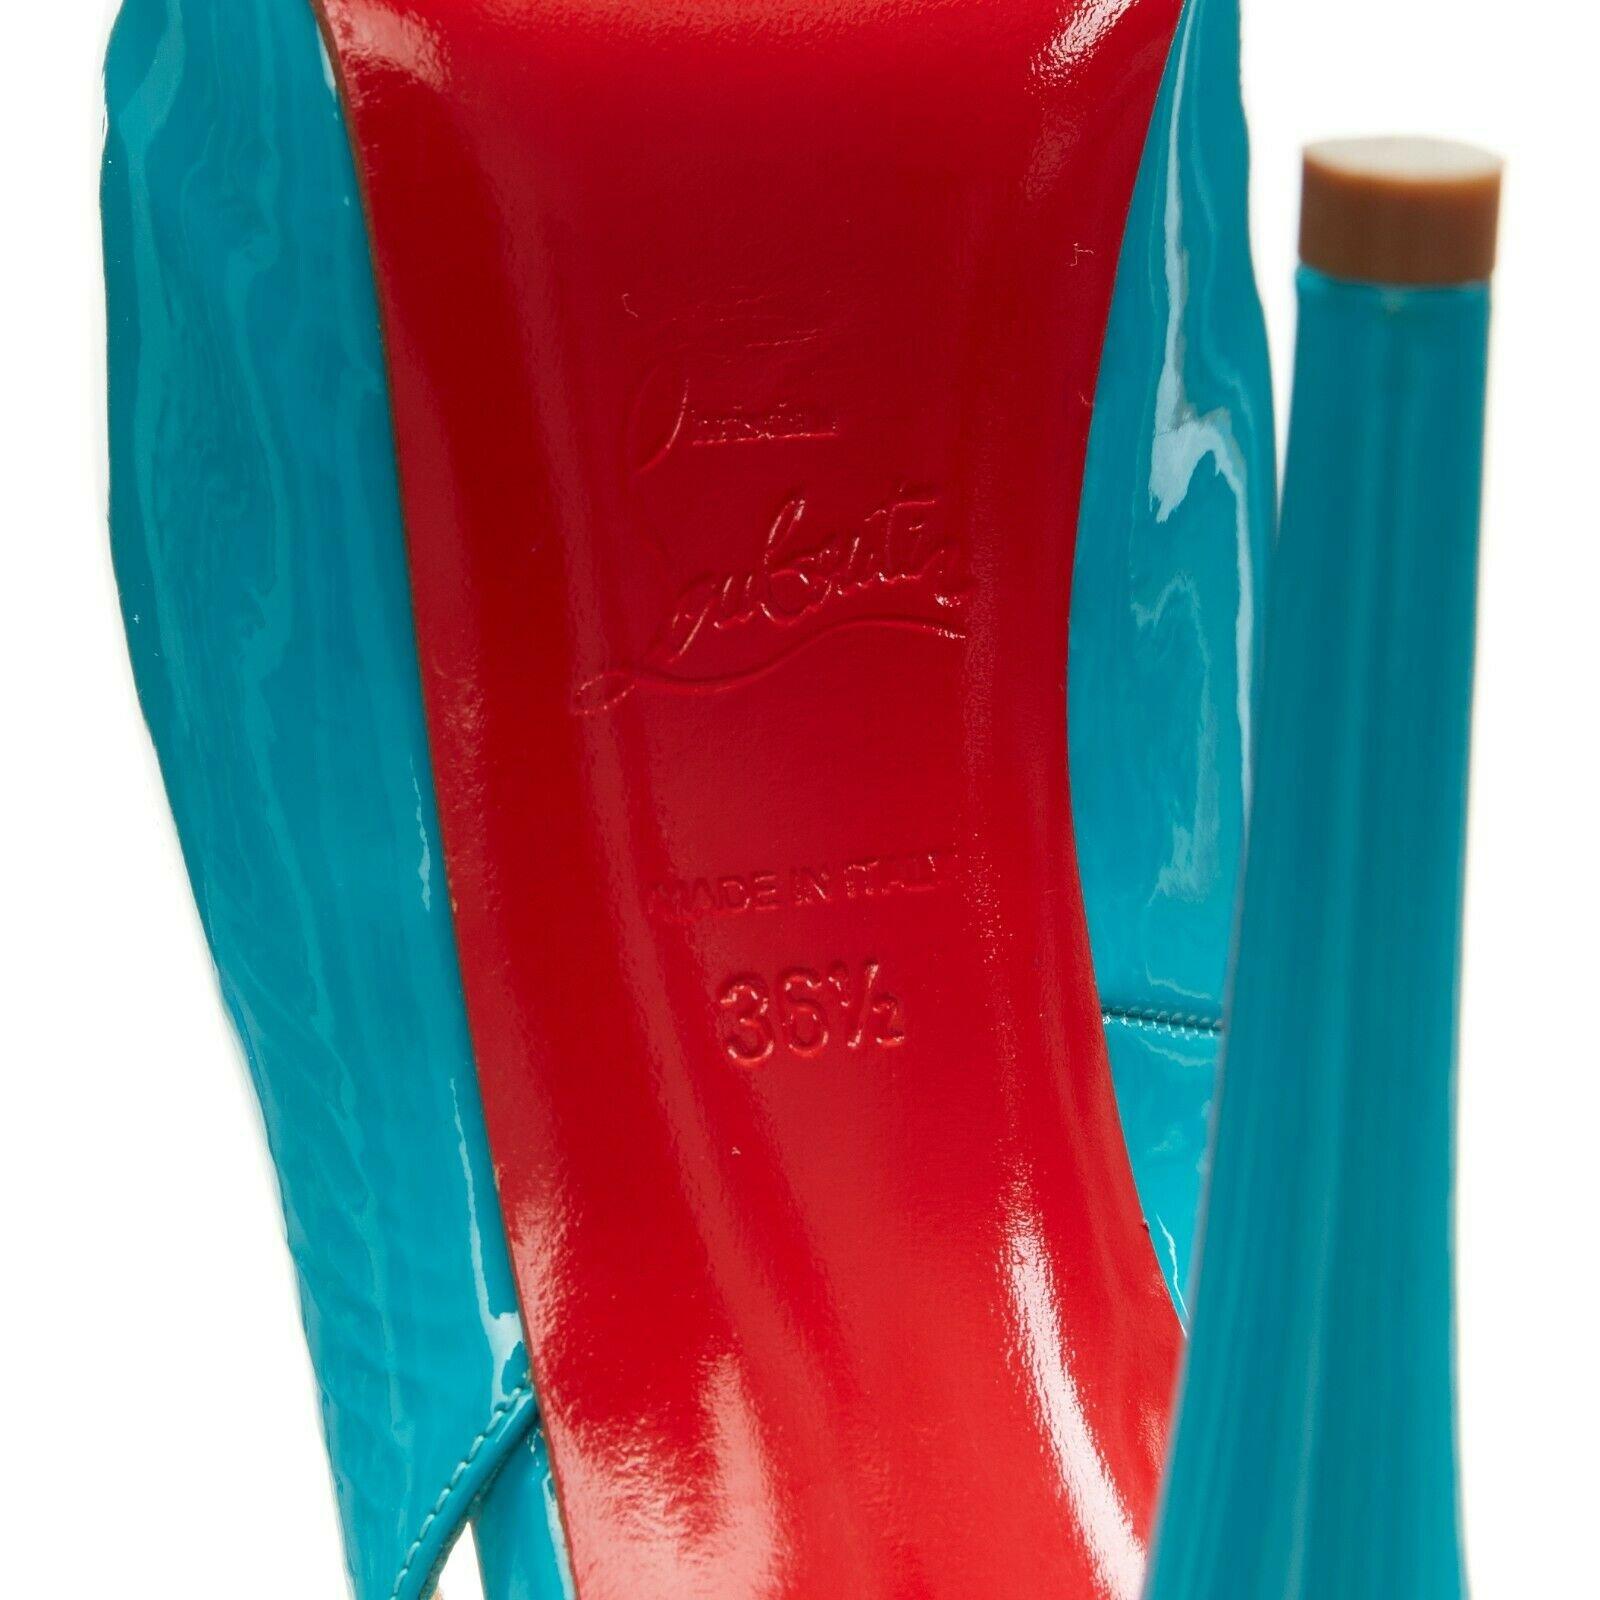 CHRISTIAN LOUBOUTIN Vendome Sling 120 teal patent leather peep toe heels EU36.5 6